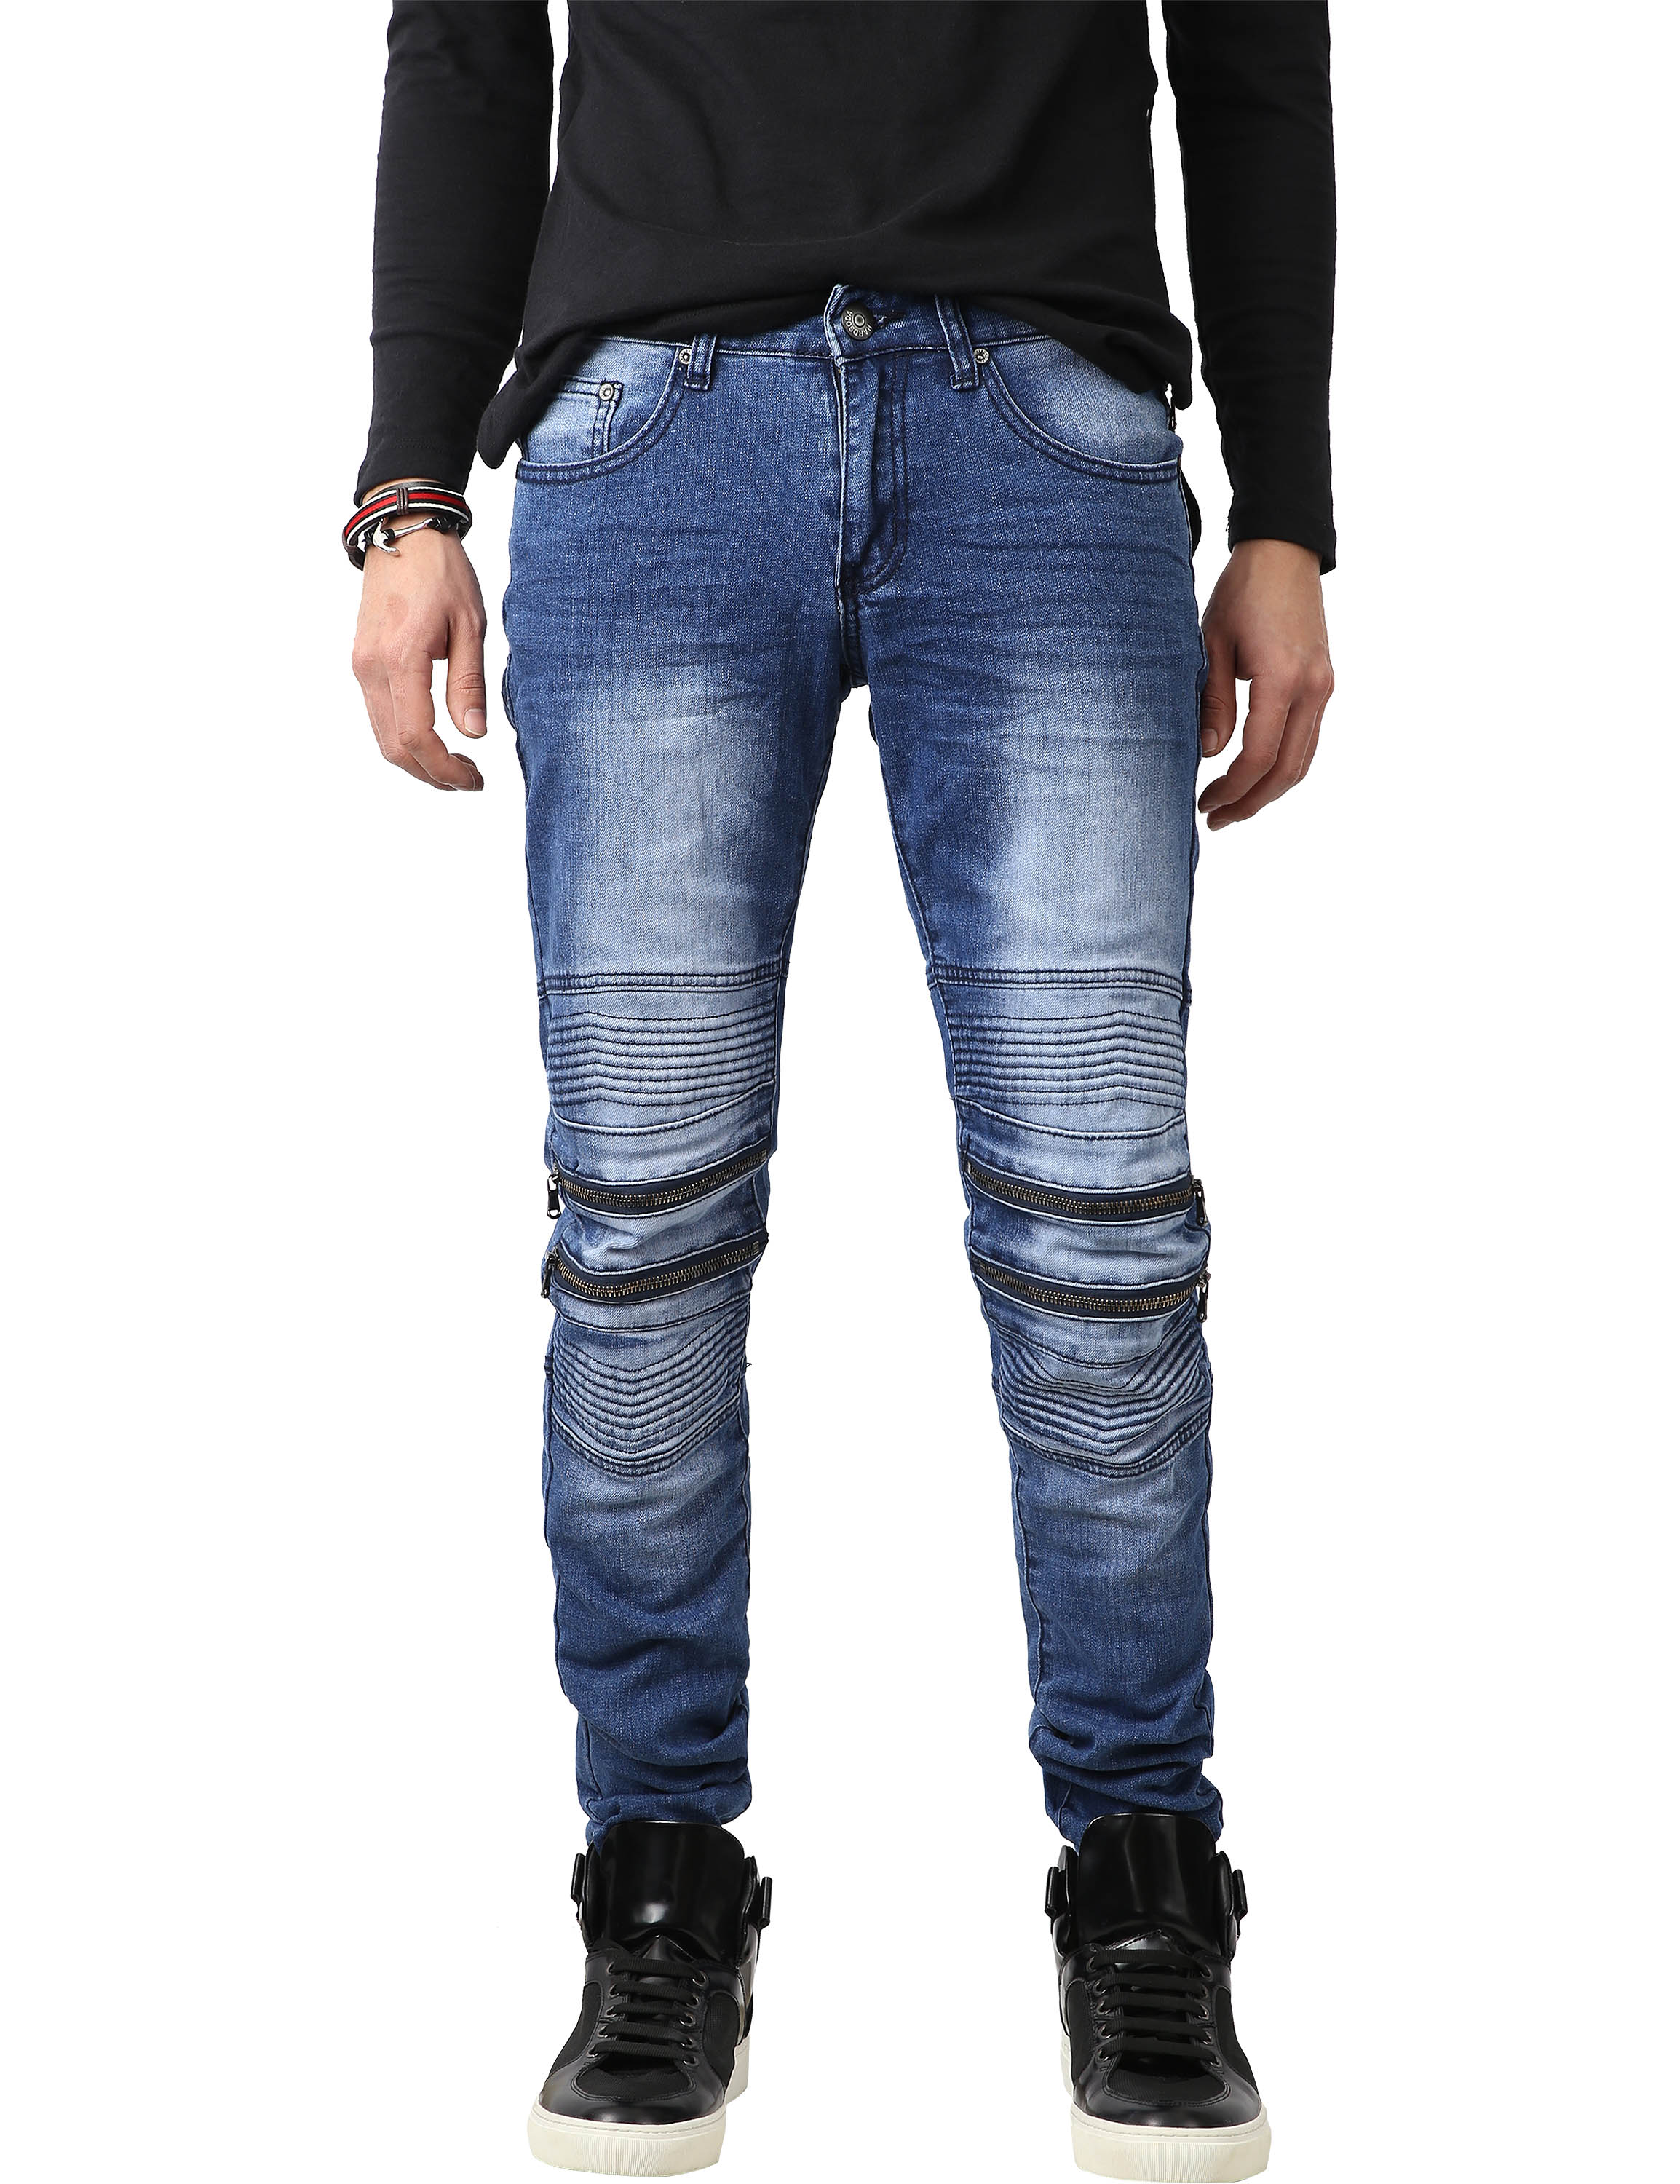 Ma Croix Mens Biker Jeans Distressed Ripped Zipper Straight Slim Fit Stretch Denim Pants - image 2 of 6